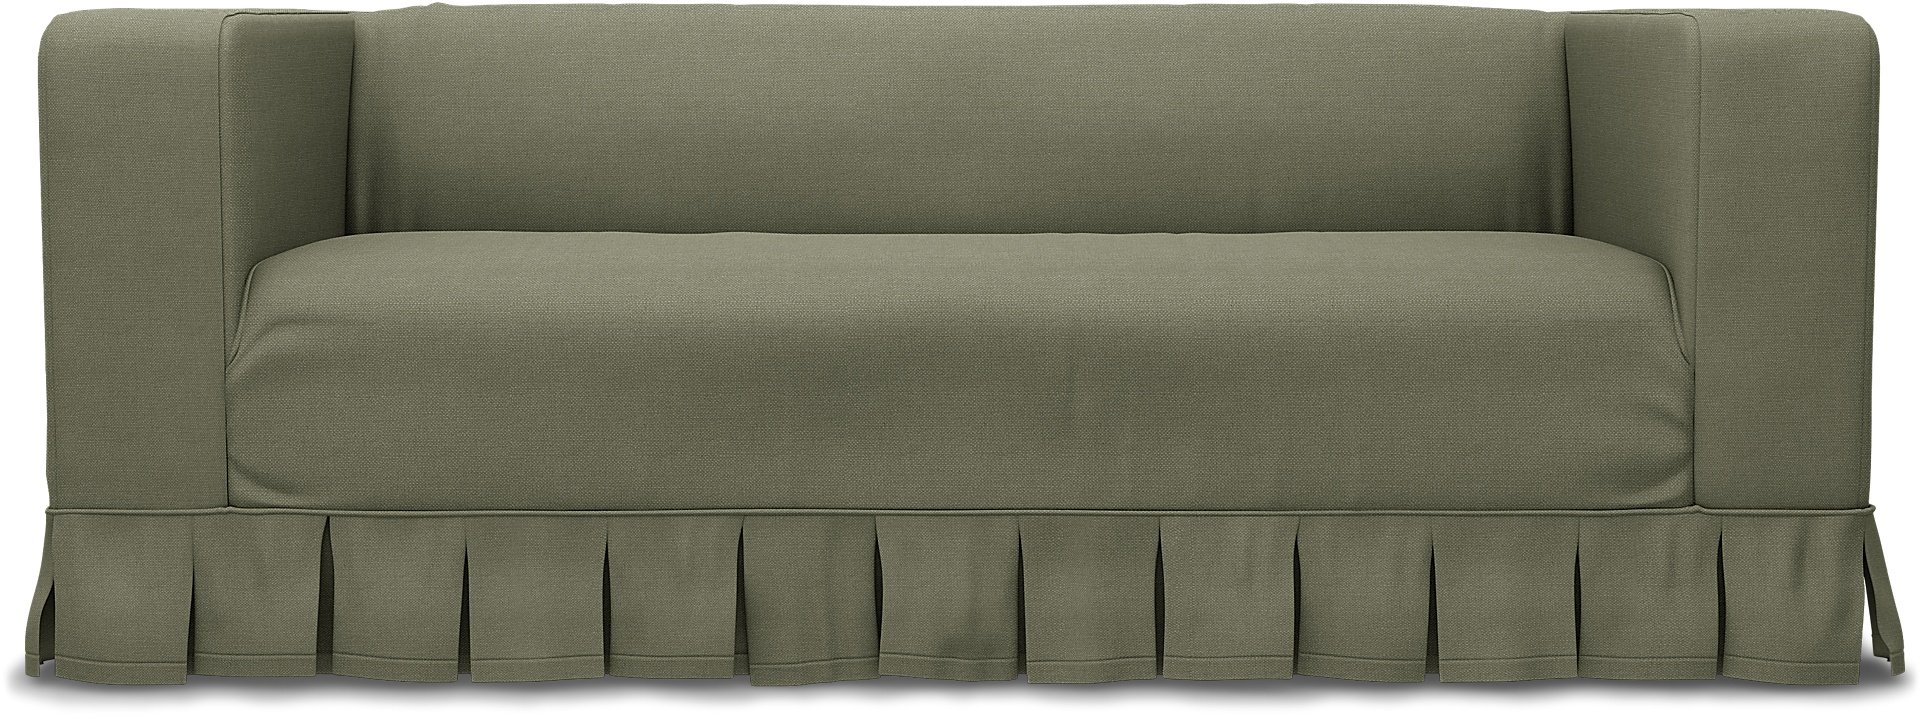 IKEA - Klippan 2 Seater Sofa Cover, Sage, Linen - Bemz